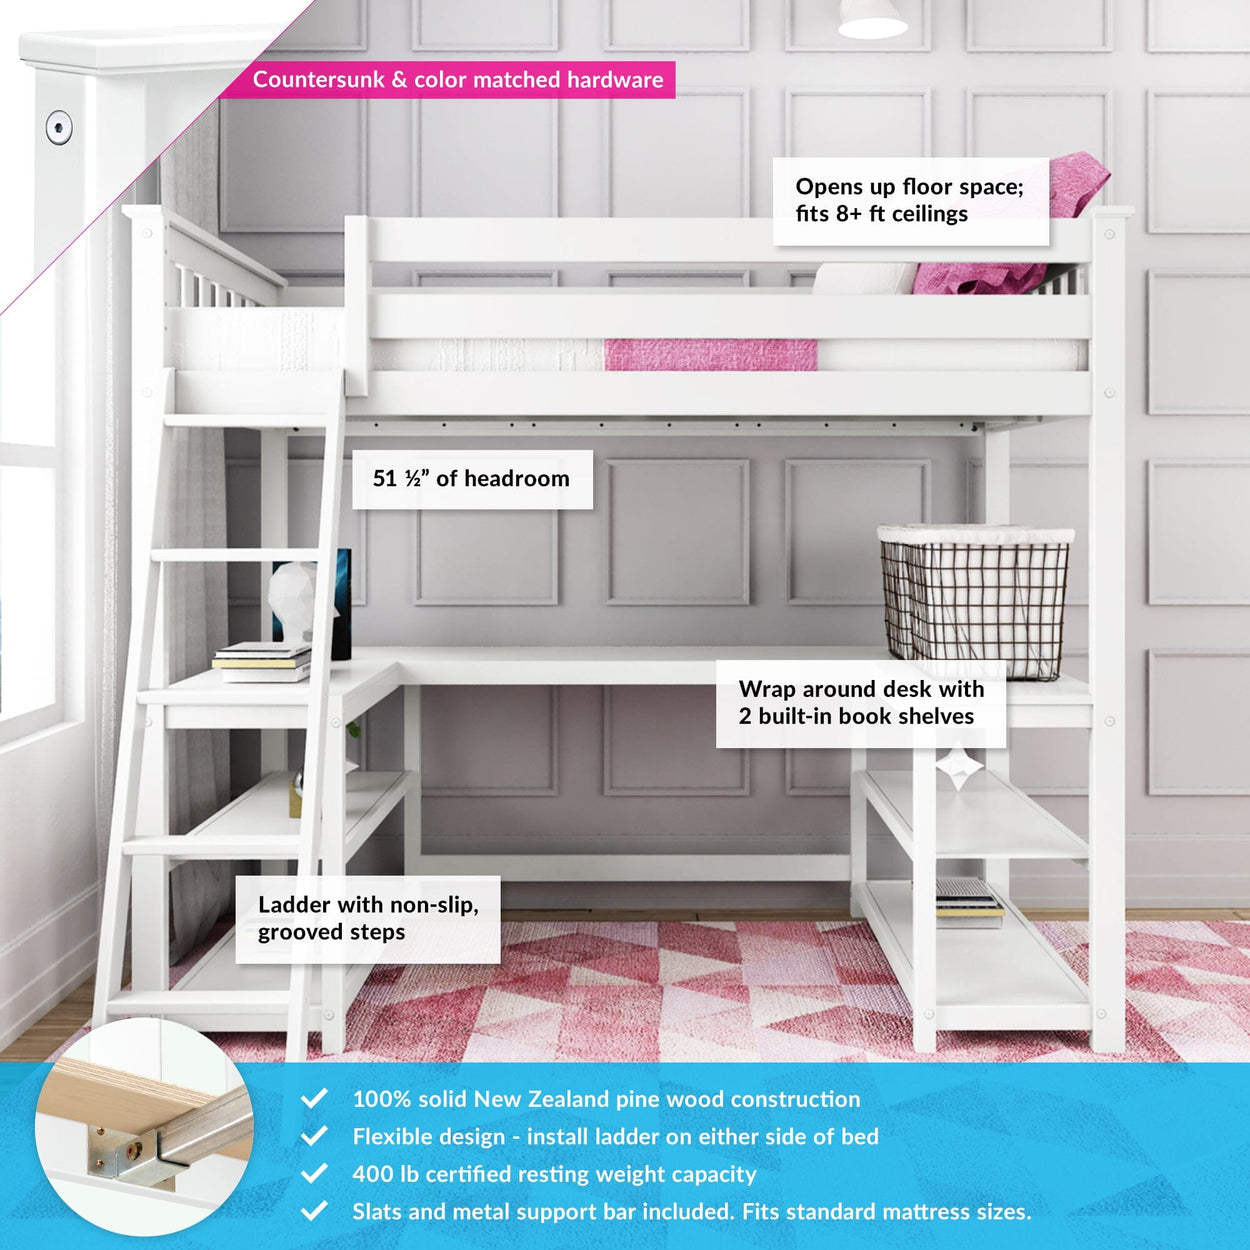 185227-002 : Storage & Study Loft Beds Twin-Size High Loft Bed with Wraparound Desk & Shelves, White